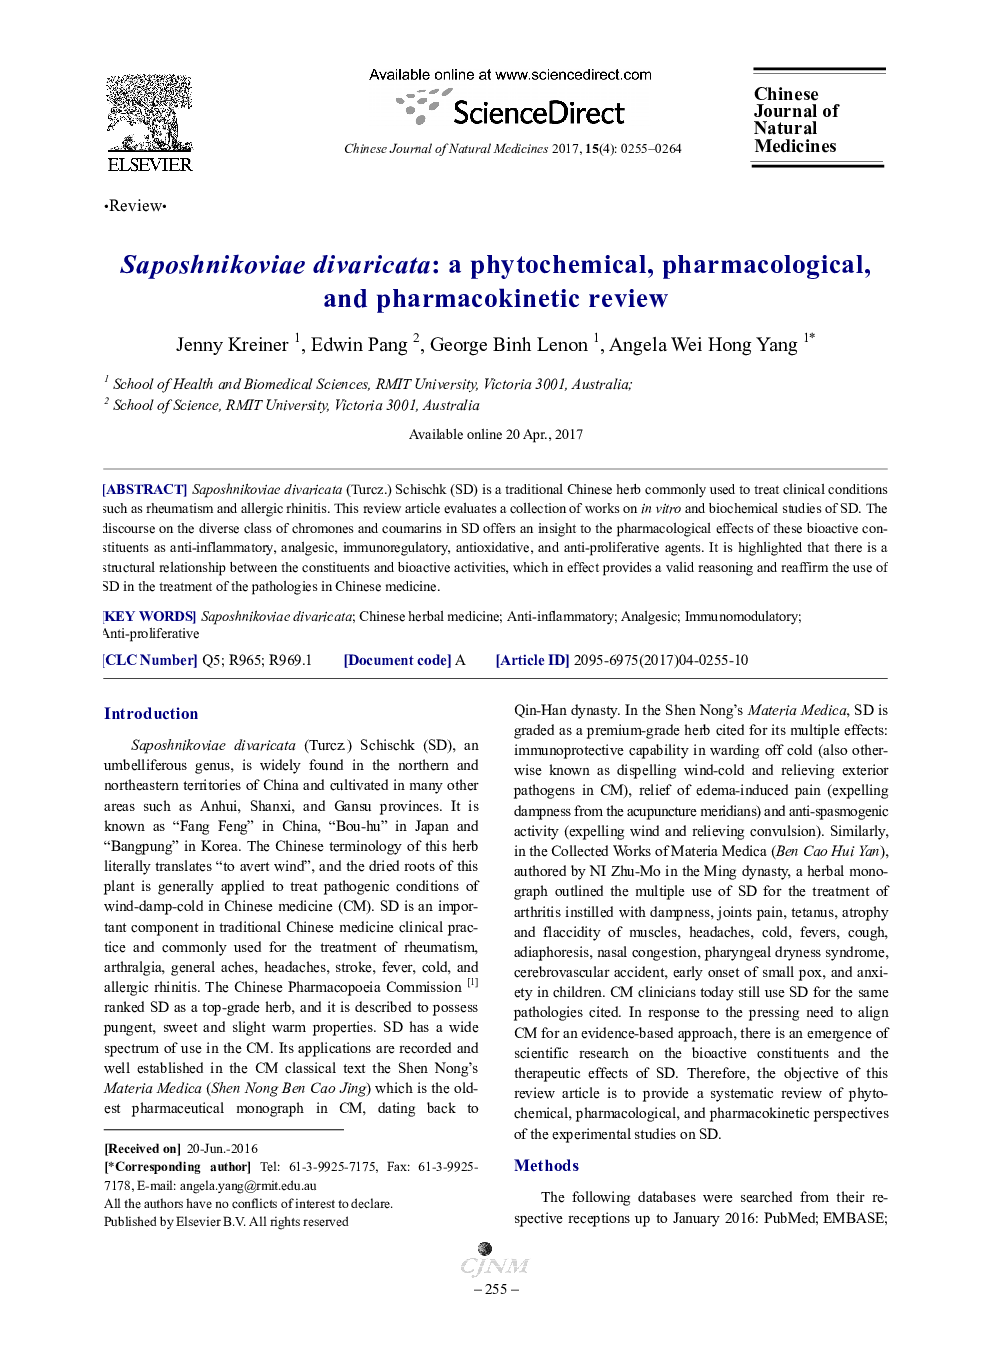 Saposhnikoviae divaricata: a phytochemical, pharmacological, and pharmacokinetic review